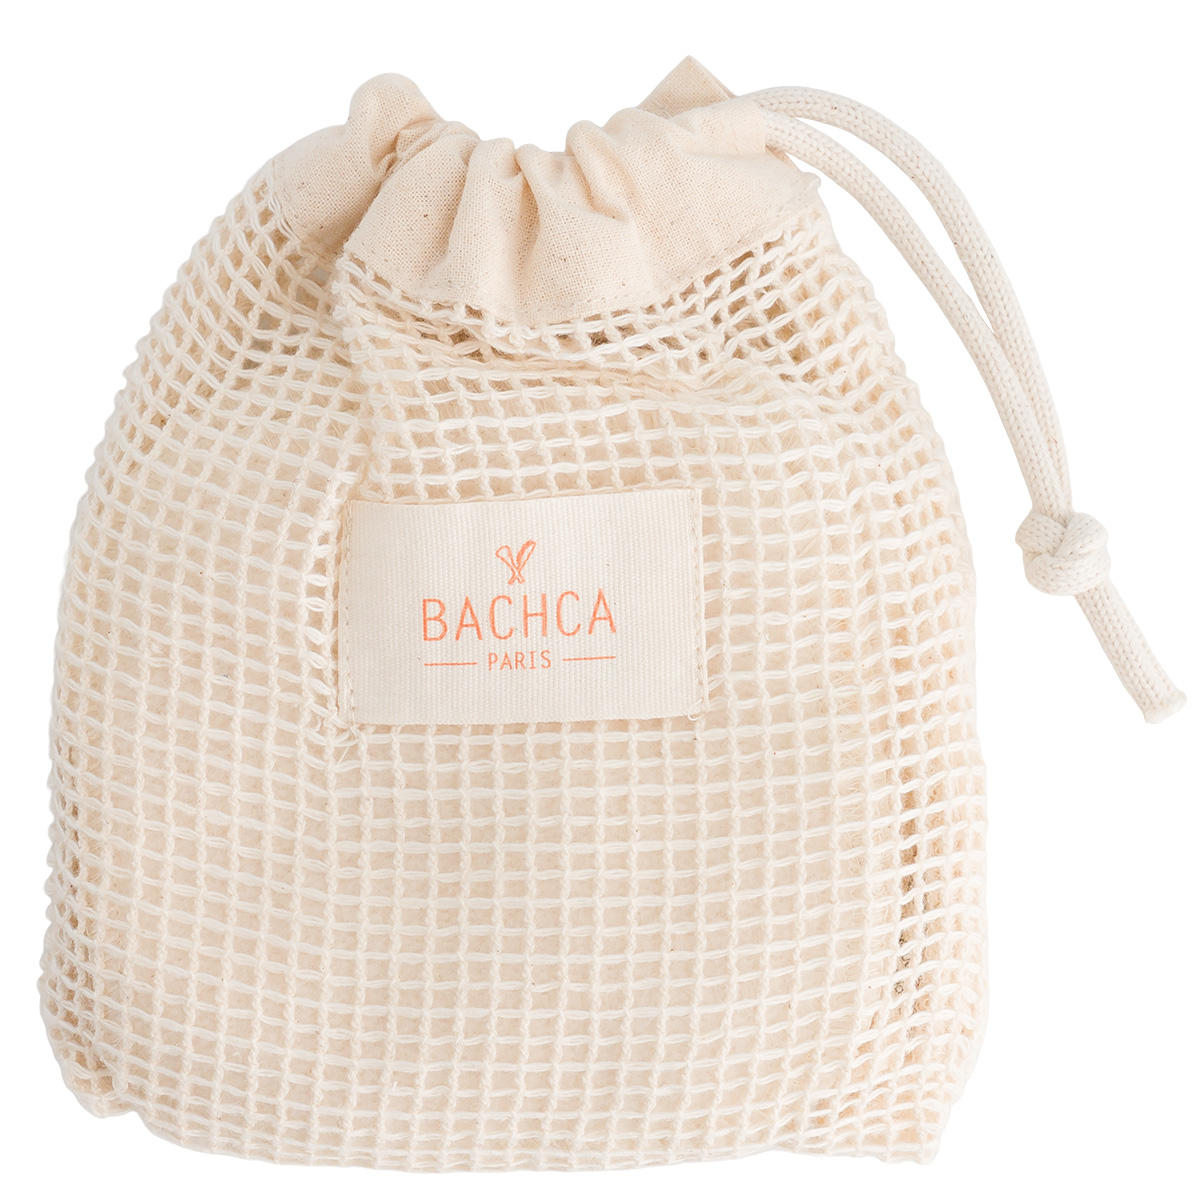 BACHCA Reusable cotton pads + laundry bag 7 Stück